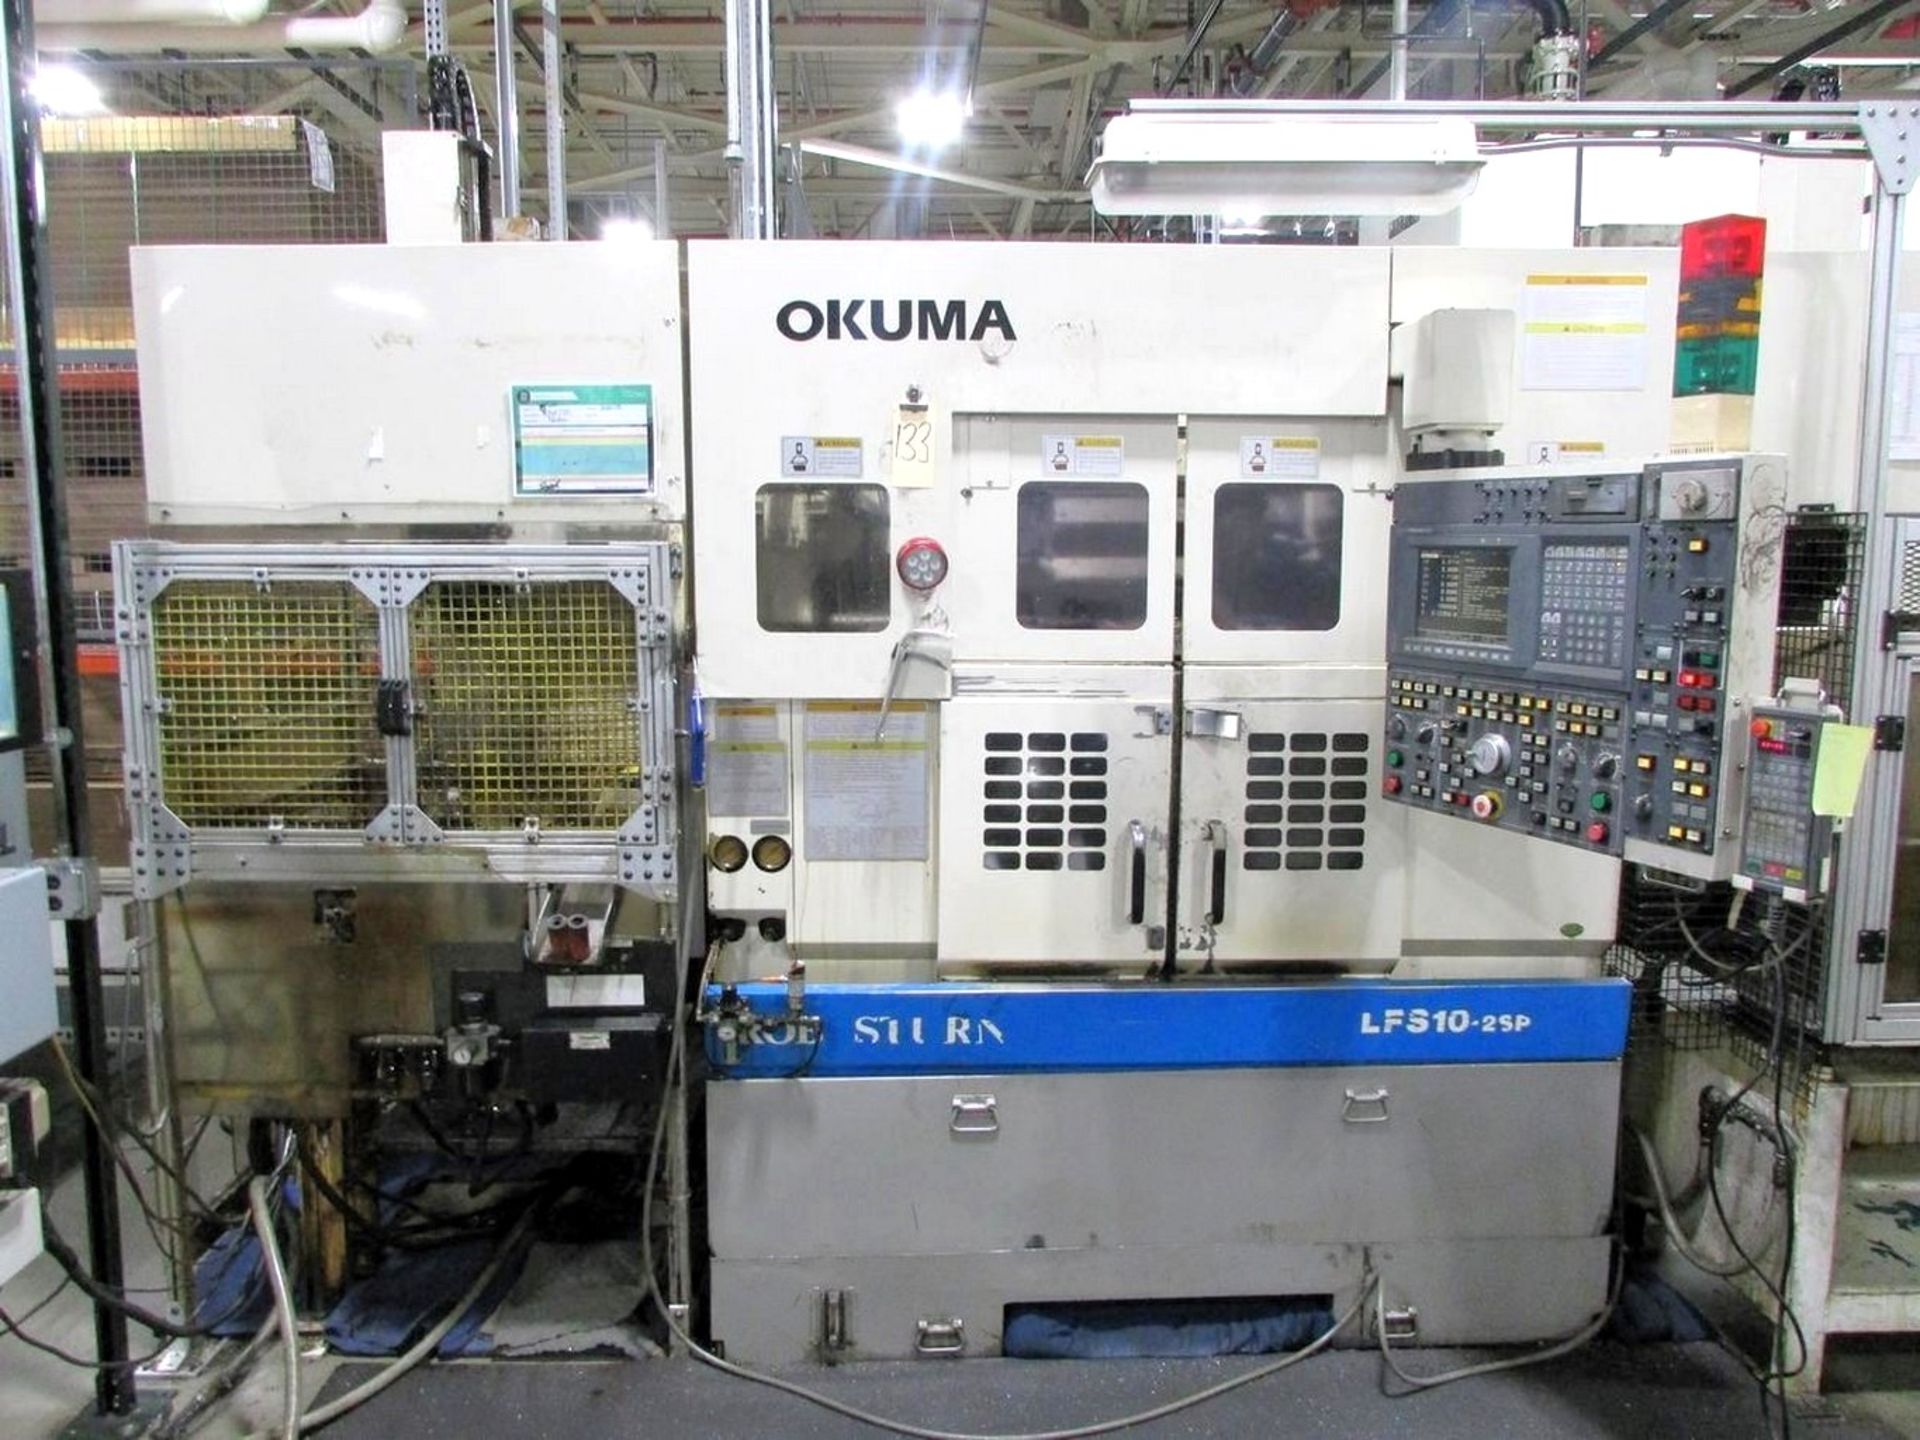 Okuma Lathe LFS10-2SP Twin-Spindle Twin-Turret CNC Turning Center, S/N 0122